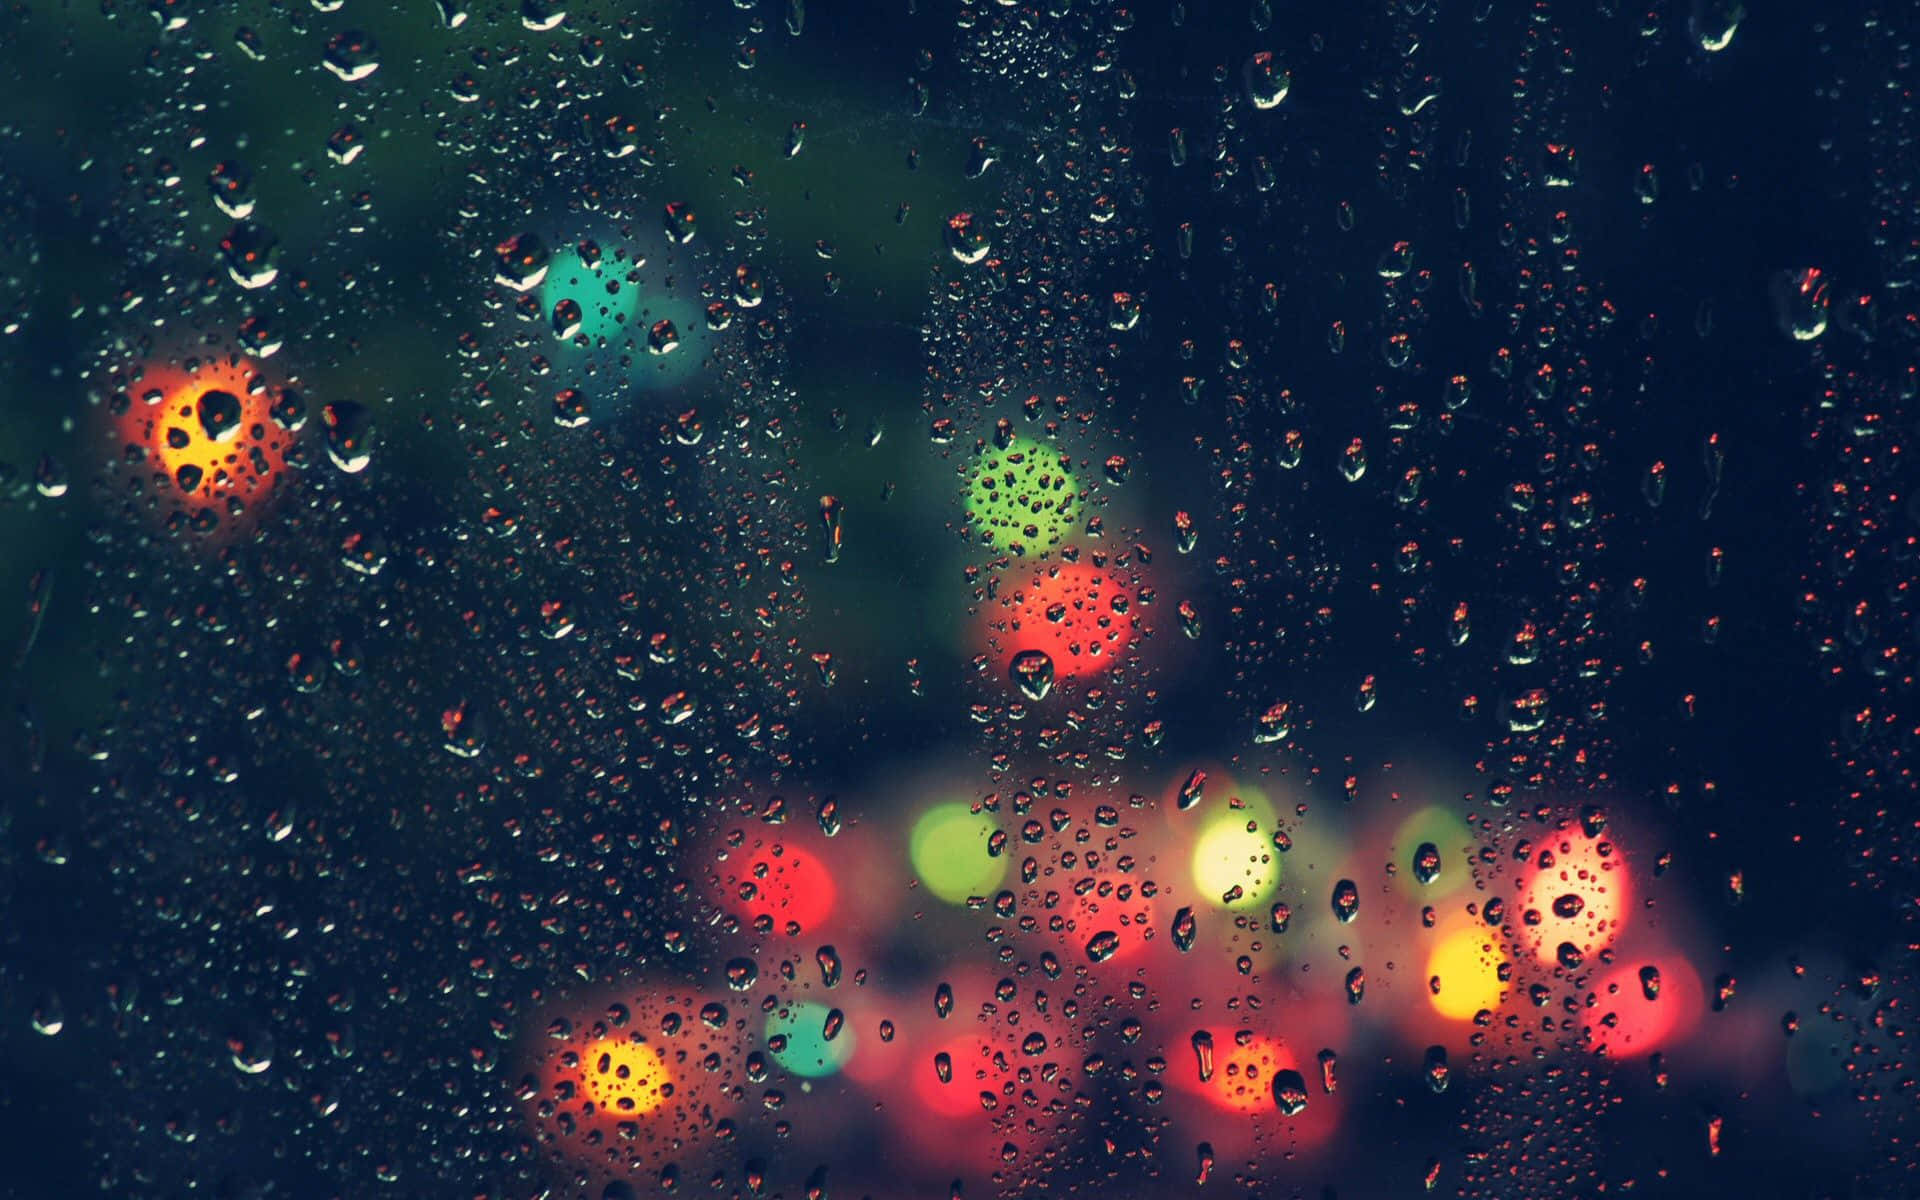 Shine Your Light Through The Rain